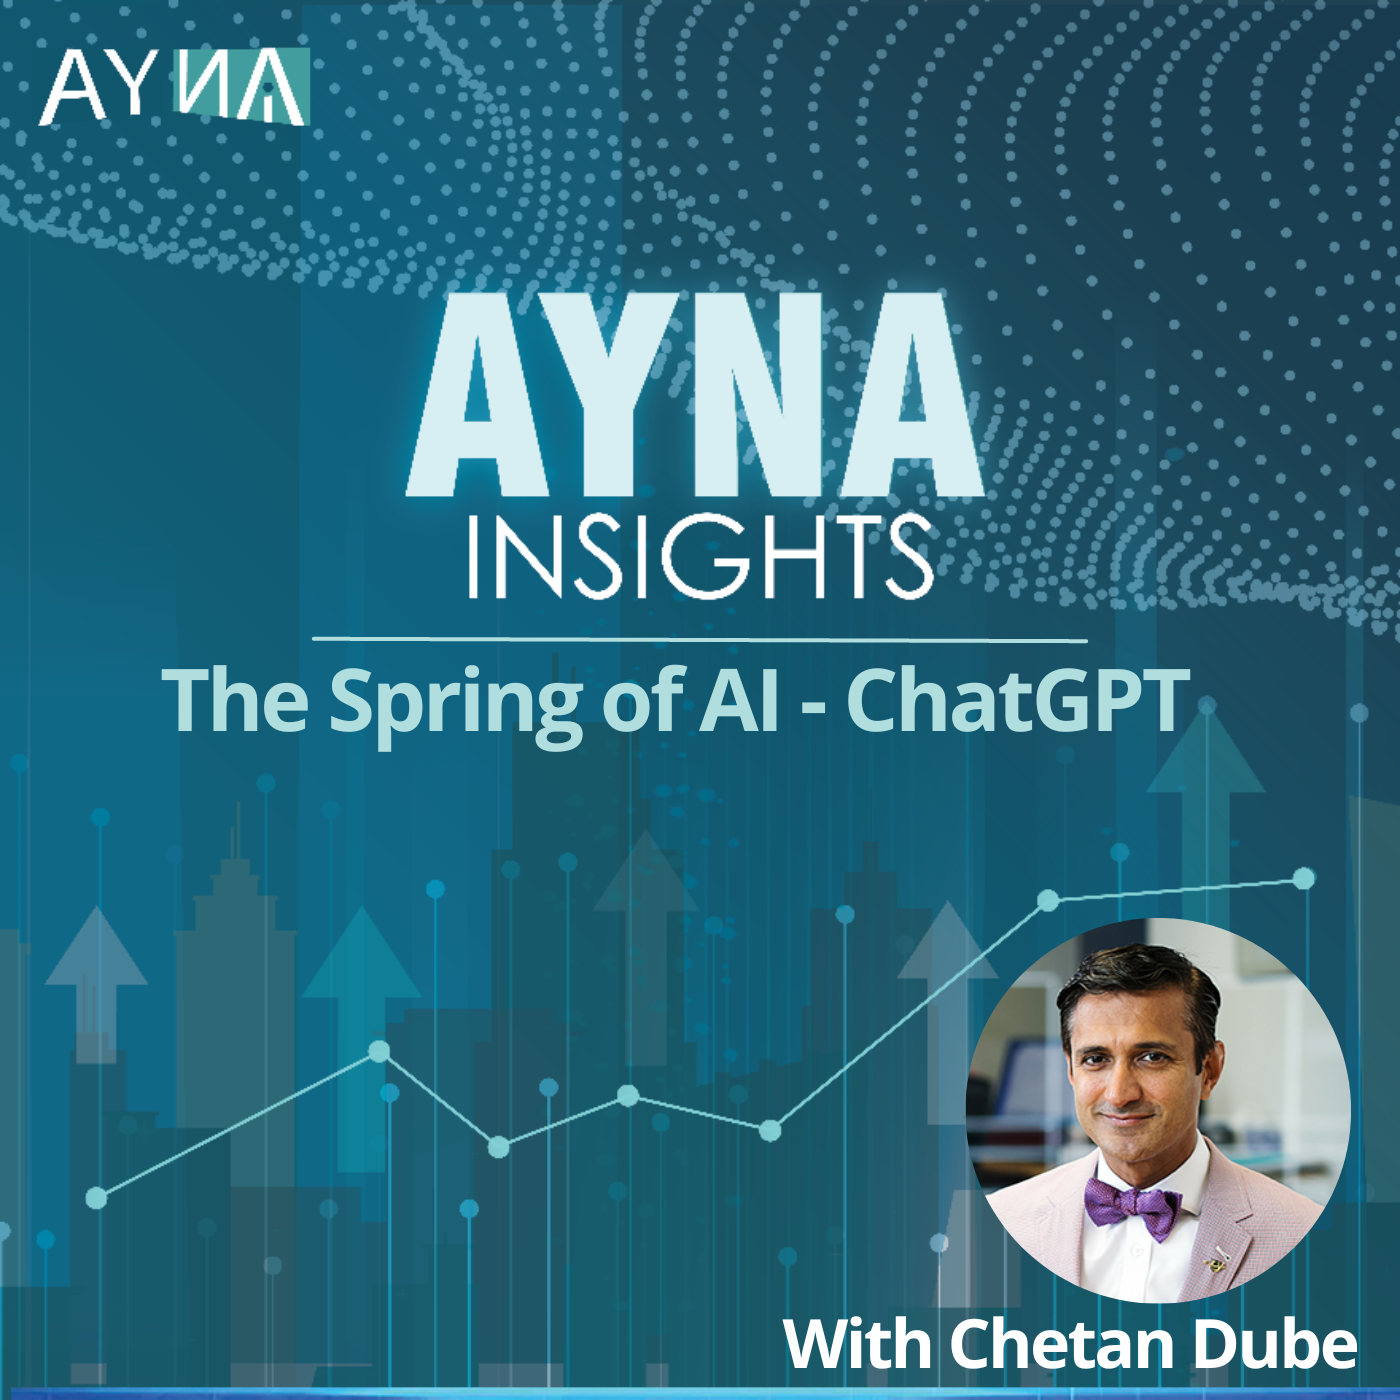 Chetan Dube: The Spring of AI - ChatGPT